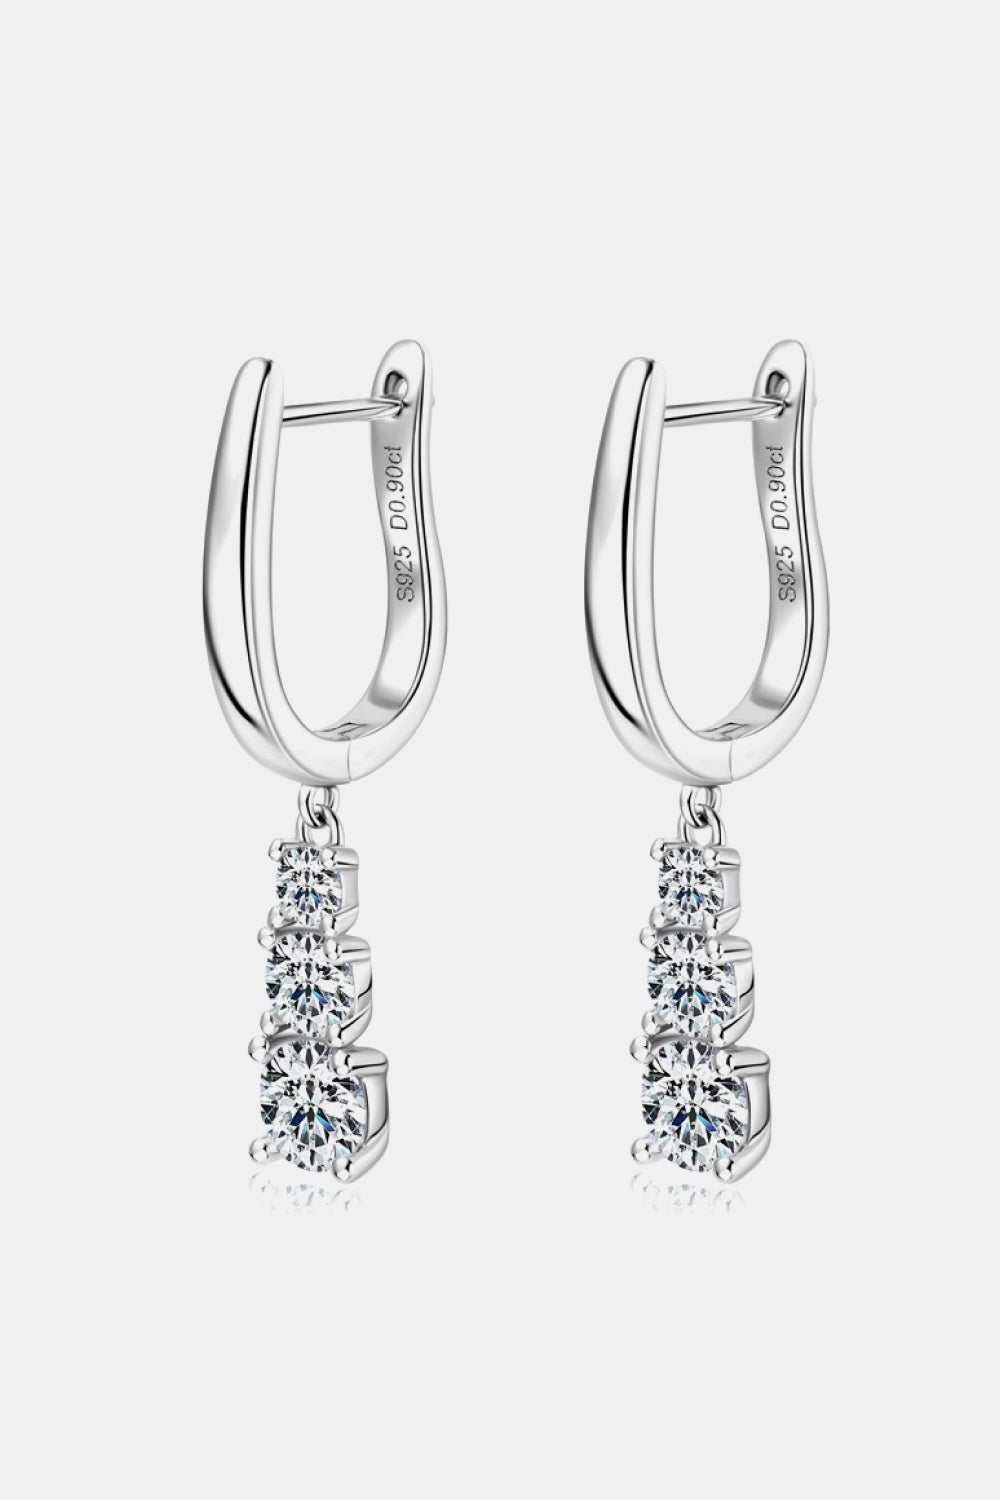 1.8 Carat Moissanite 925 Sterling Silver Drop Earrings - Uylee's Boutique